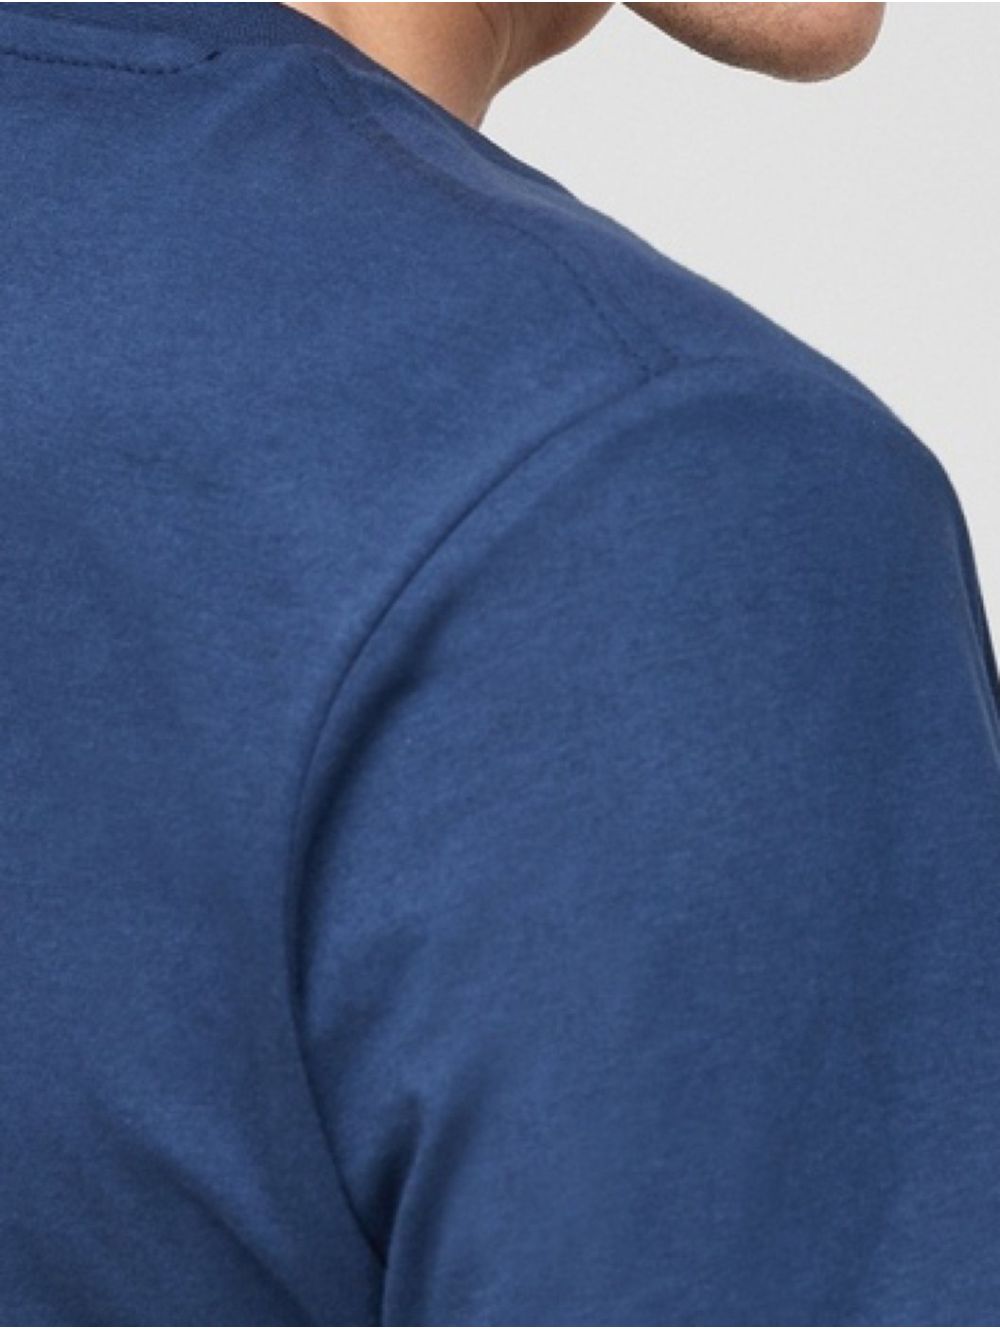 blue T-Shirt 2057432-5693 S.OLIVER jersey Ocean Blue Men\'s short-sleeved